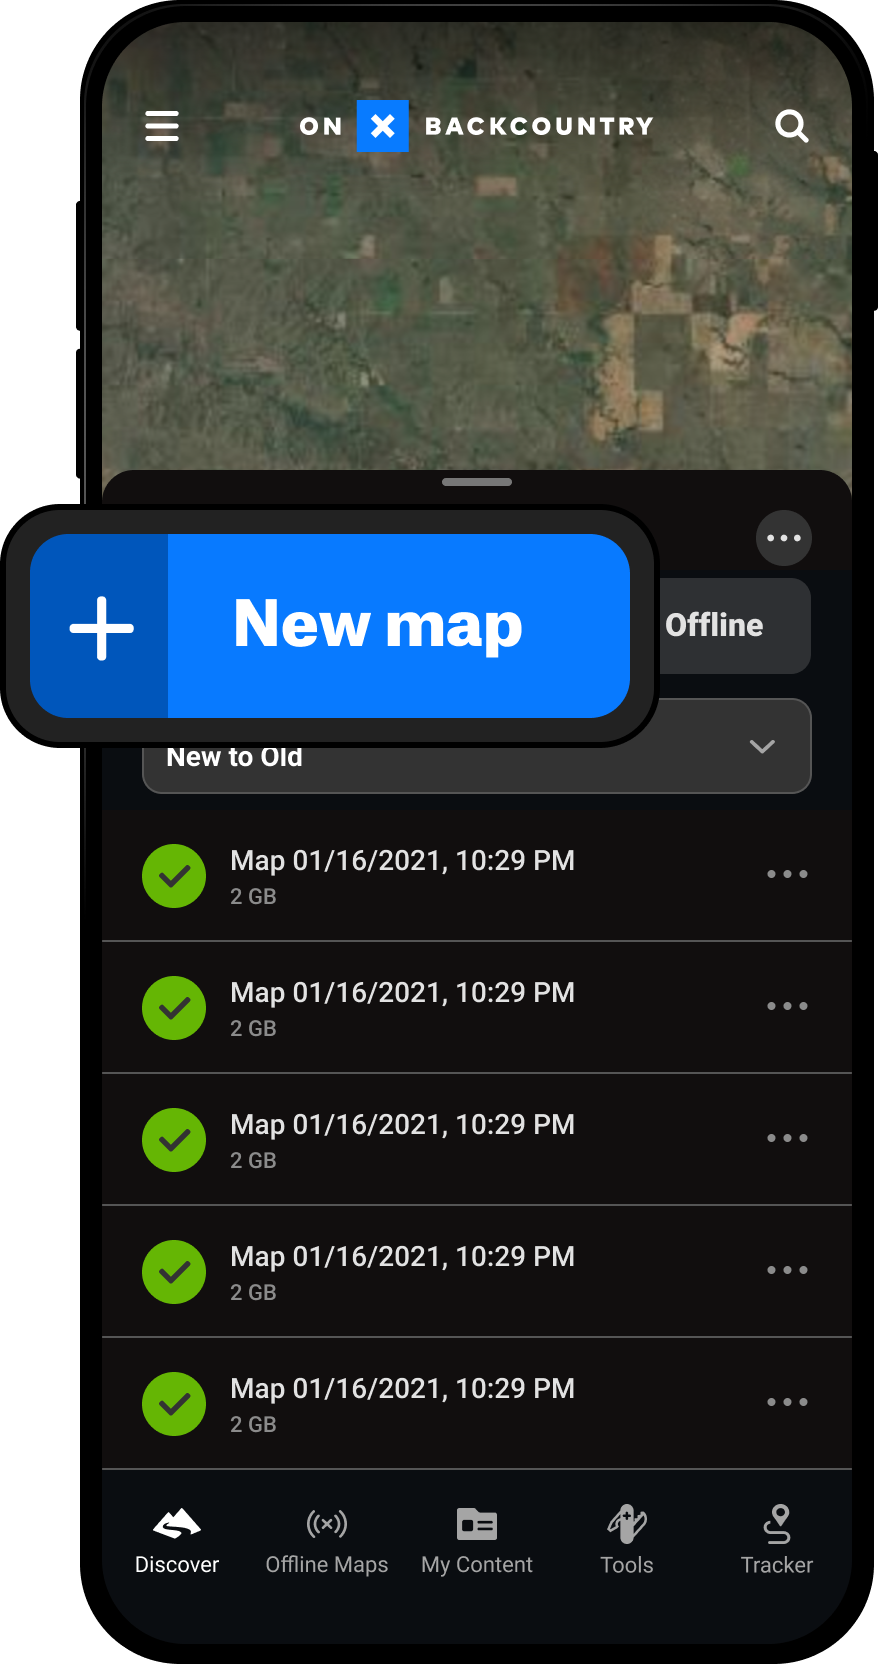 New Map Button Offline Maps Menu Backcountry App.png